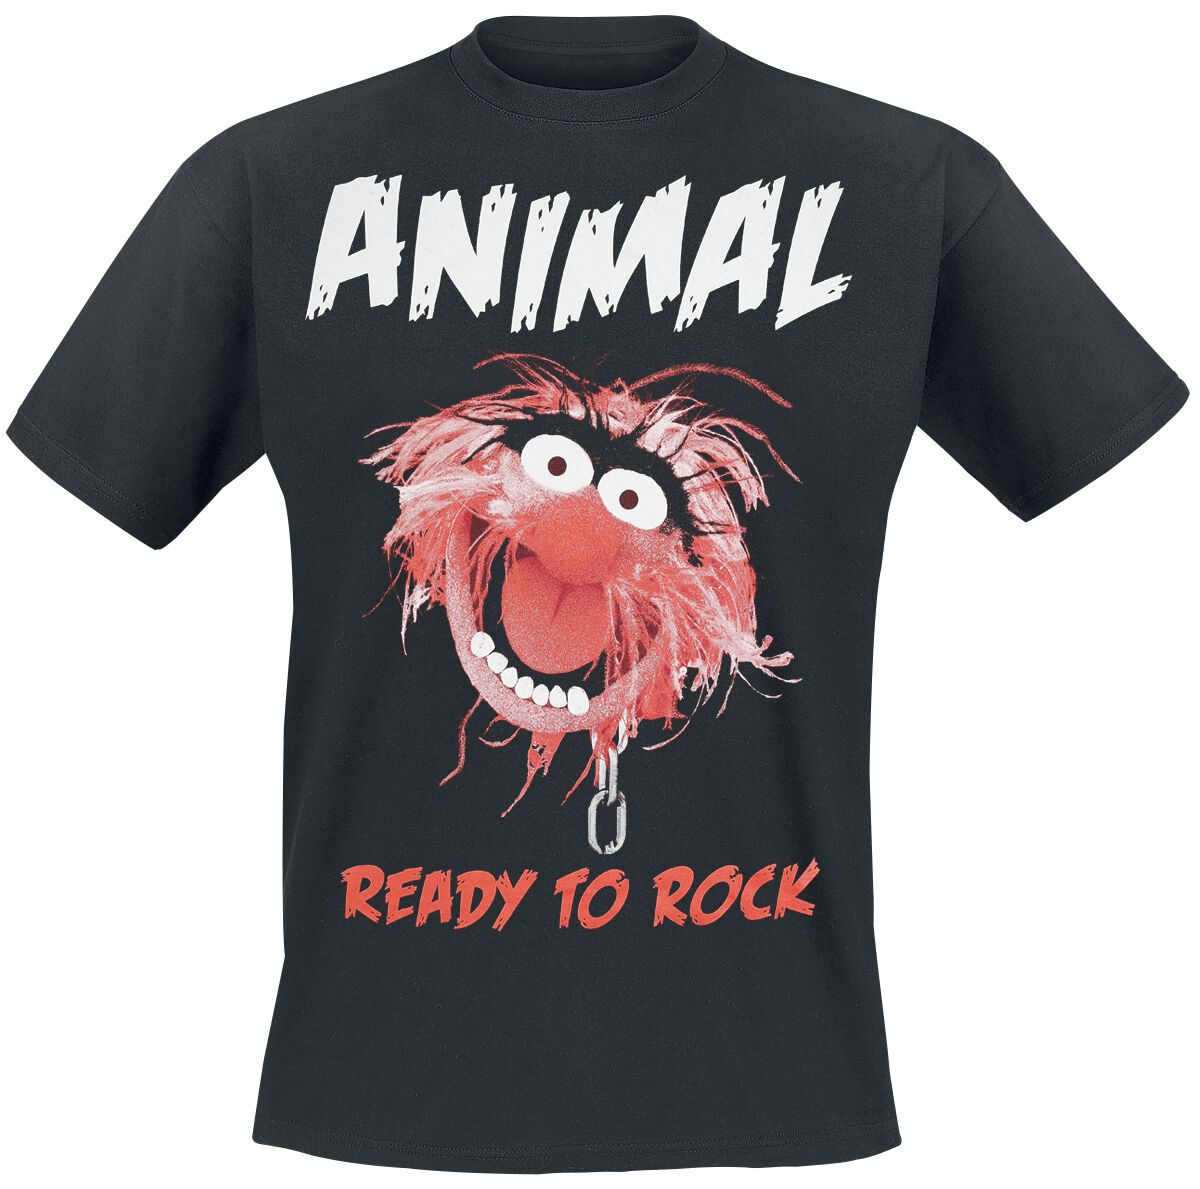 Die Muppets Animal - Ready To Rock T-Shirt schwarz in S